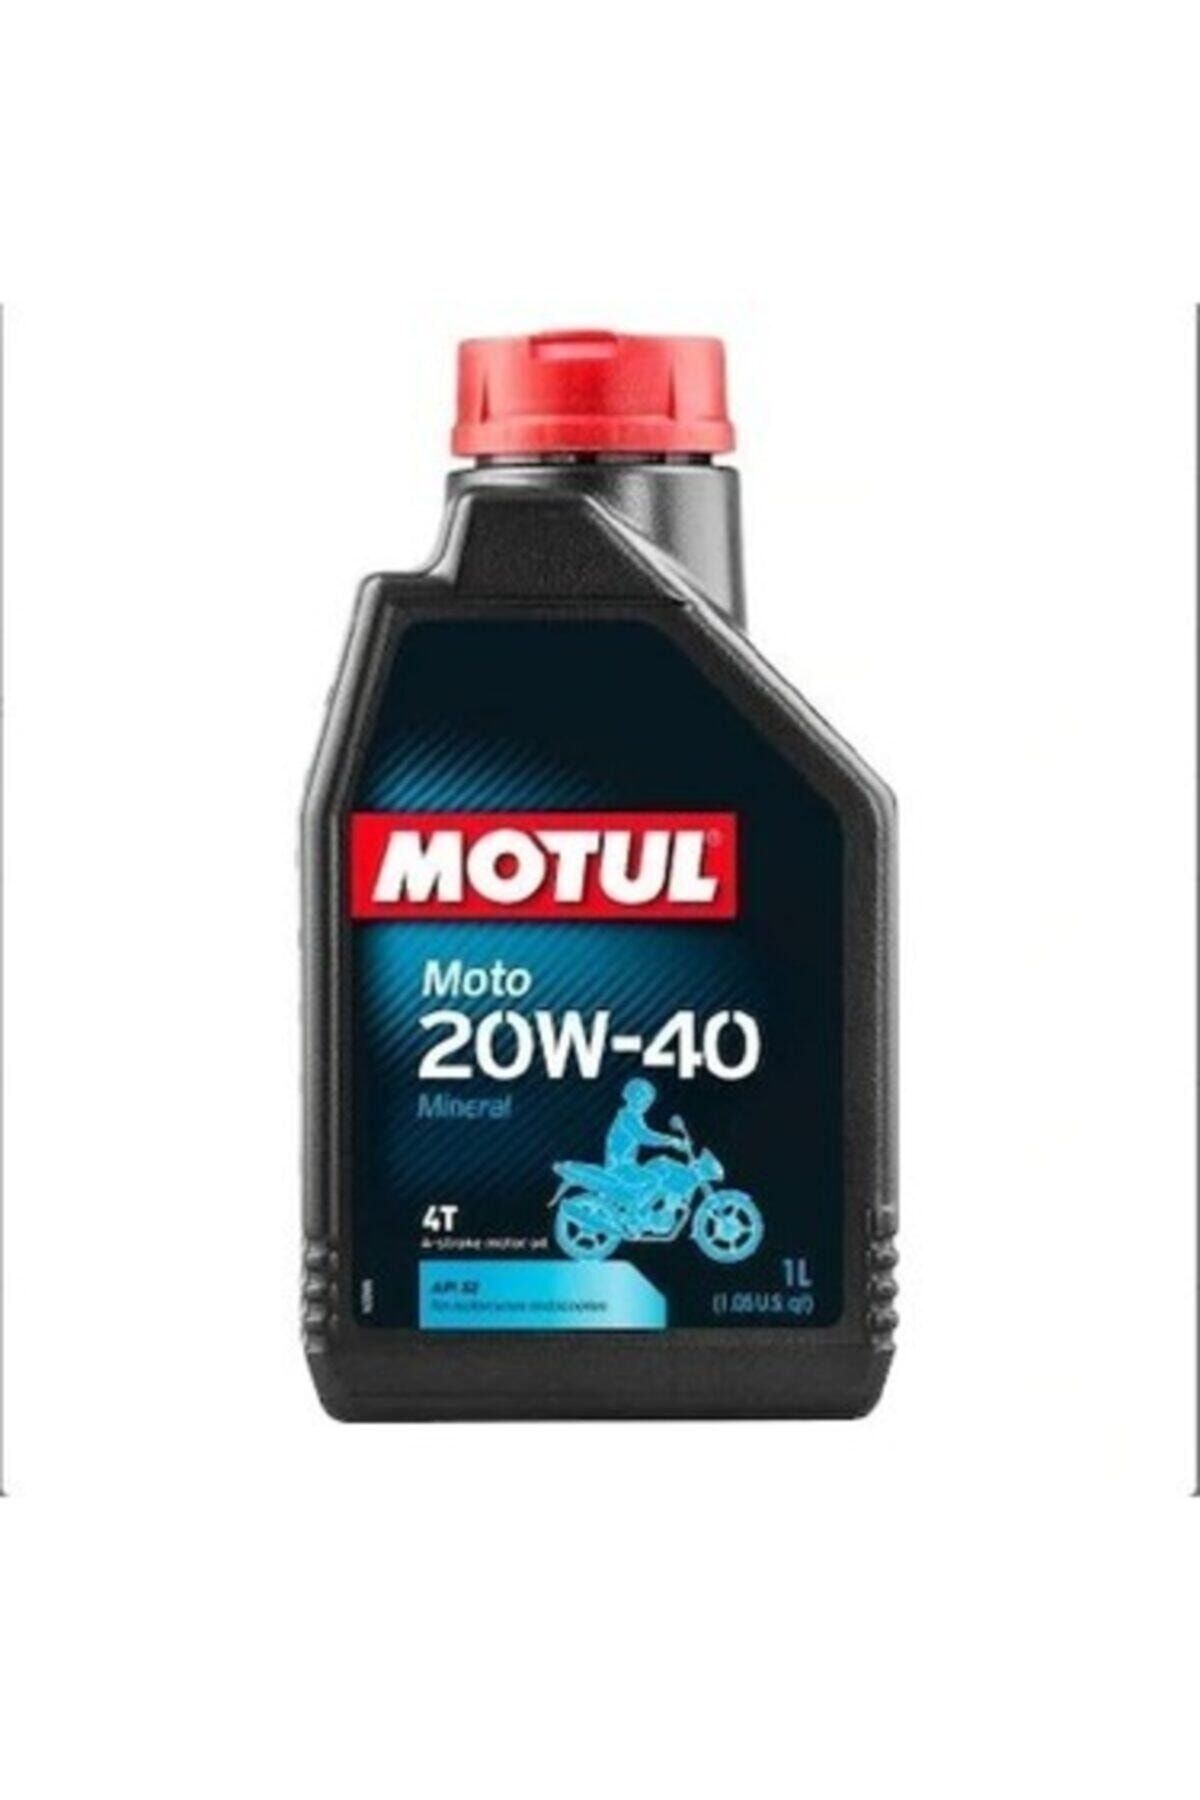 Motul Moto 20w/40 1l 4 Zamanlı Mineral Motosiklet Yağı